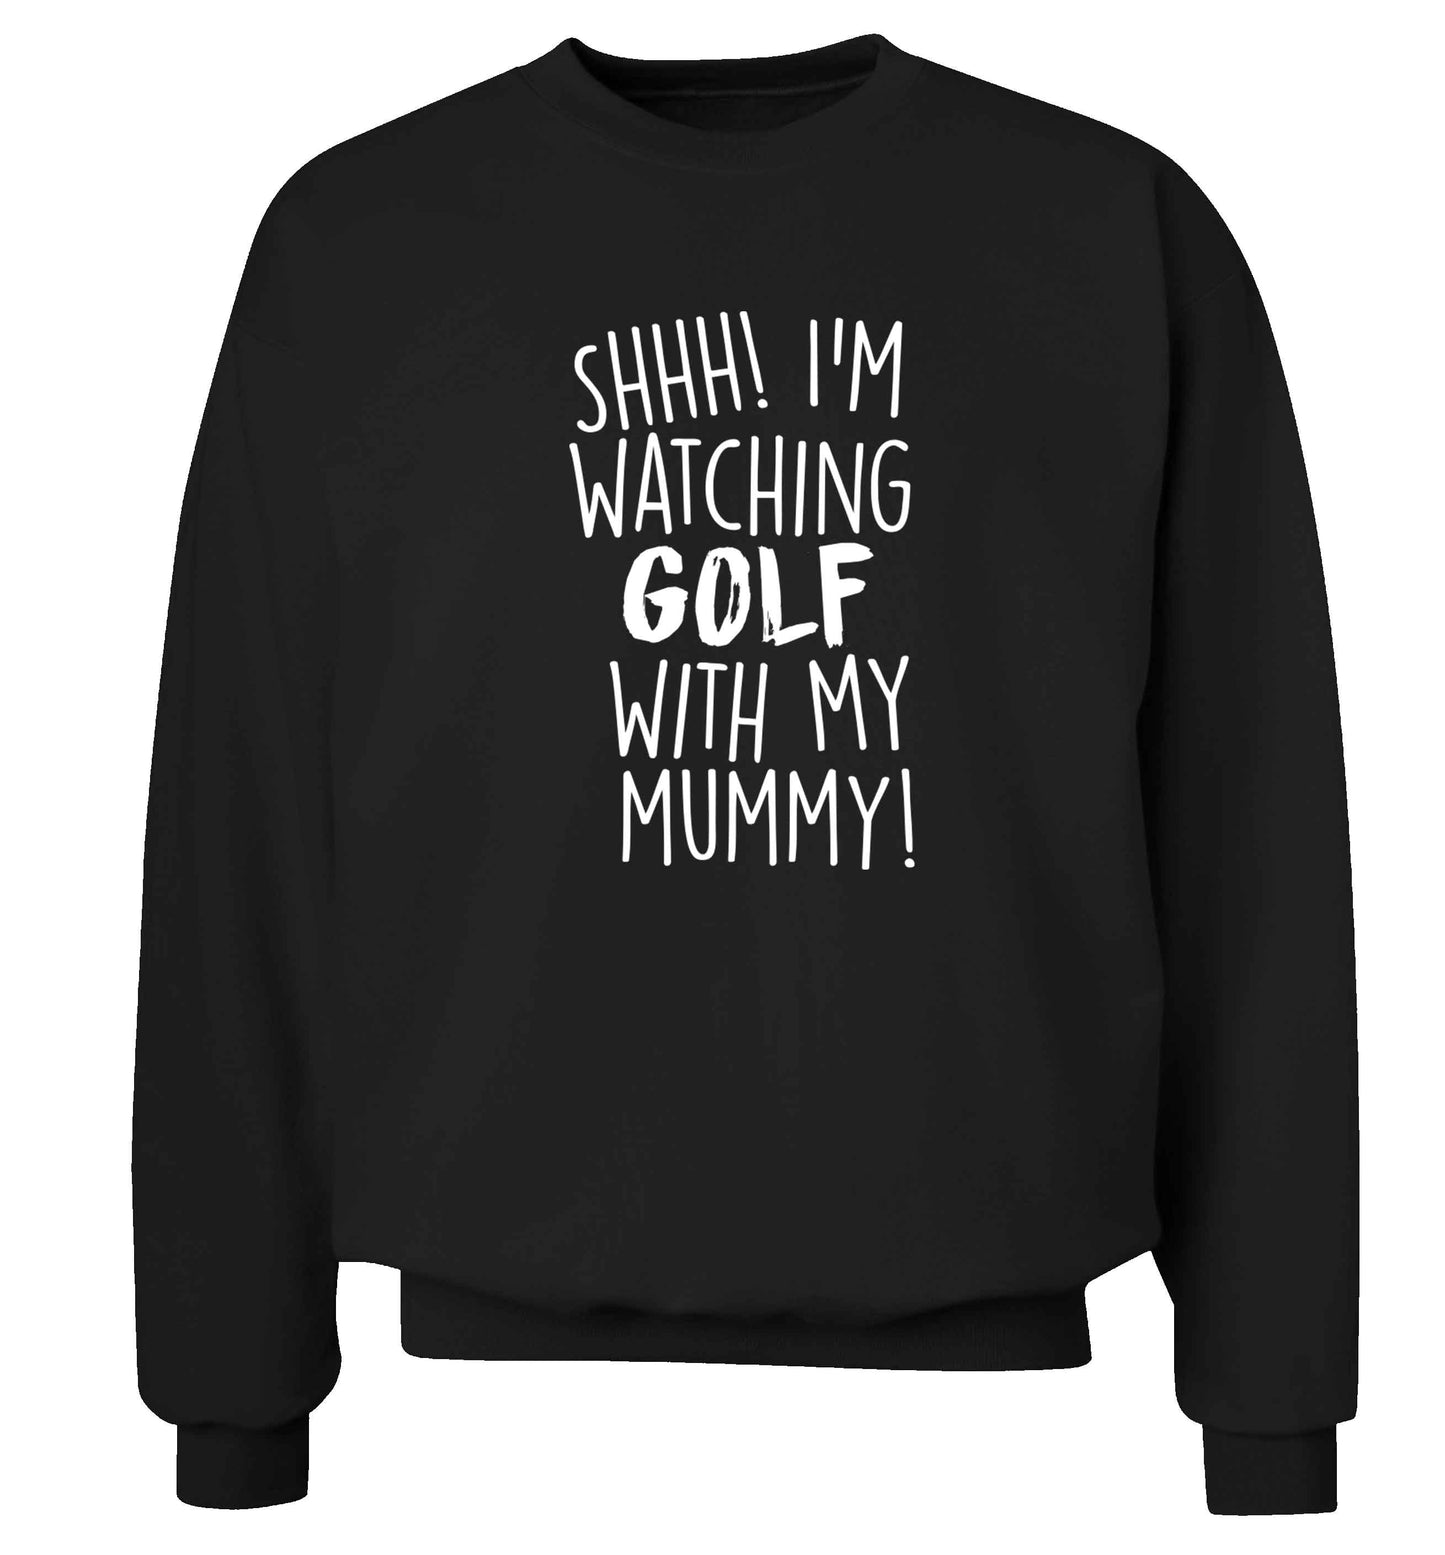 Shh I'm watching golf with my mummy Adult's unisex black Sweater 2XL